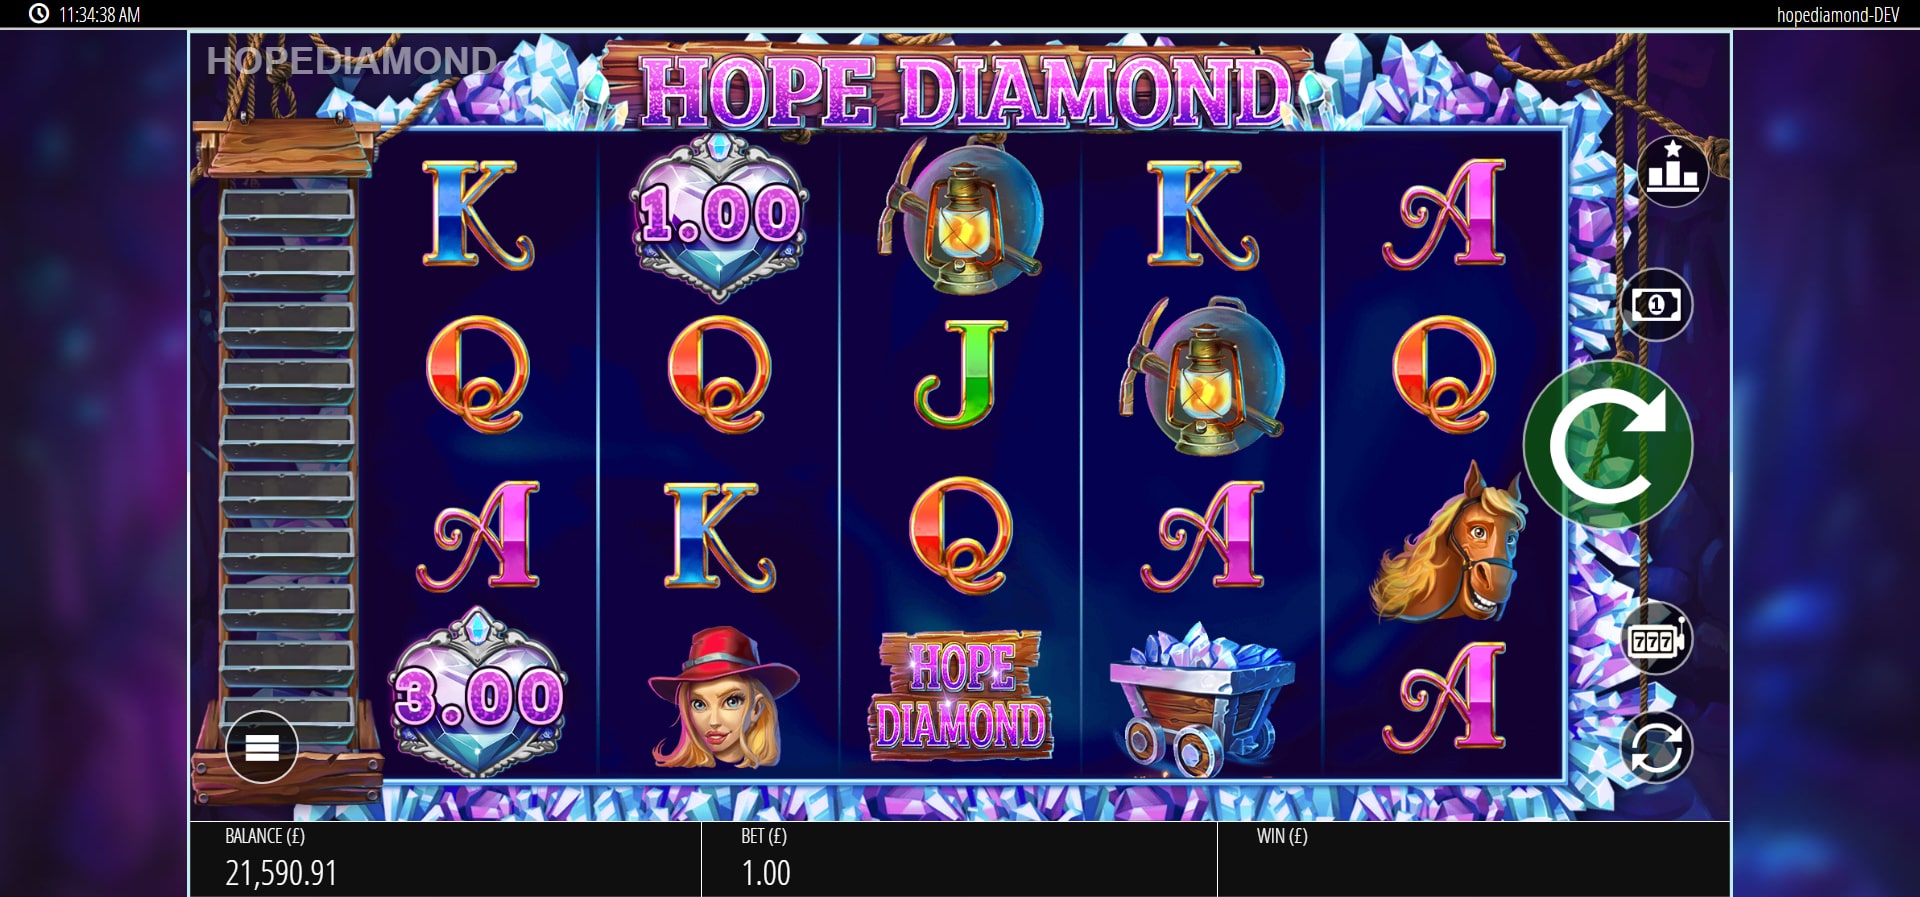 Hope Diamond Free Spins